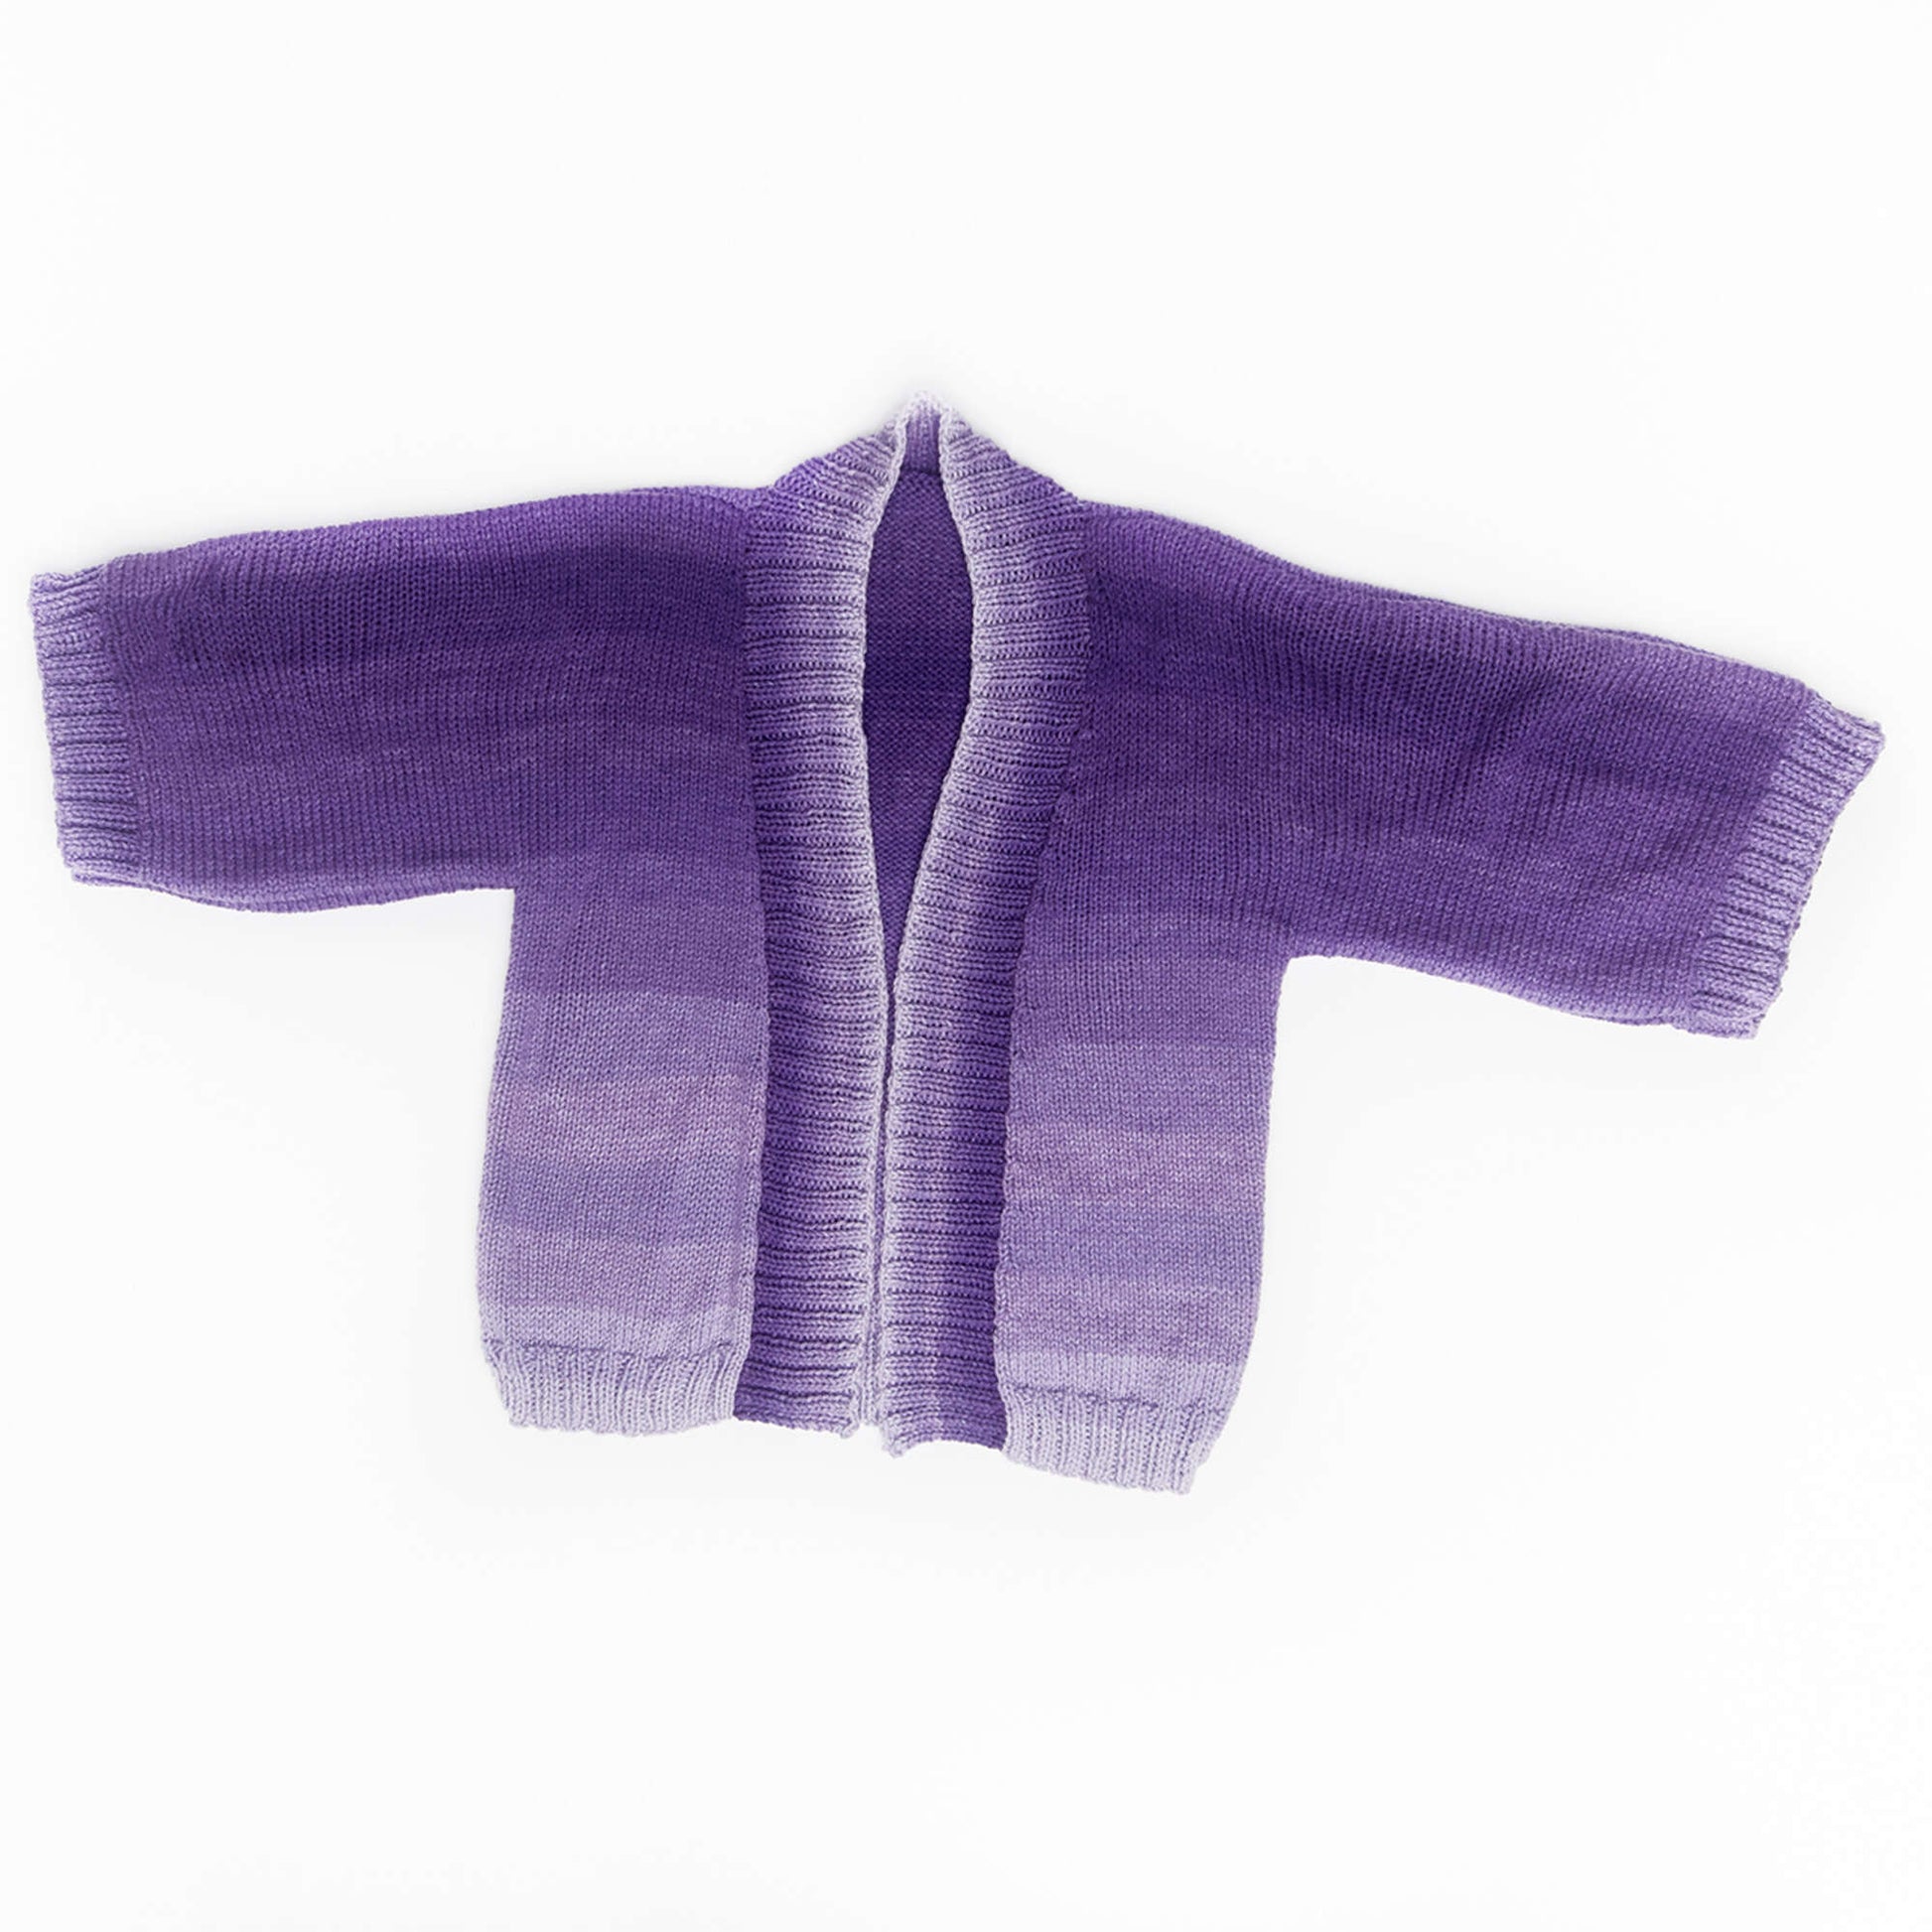 5 Kimono Cardigan Free Knitting Pattern  Knitting patterns free cardigans, Kimono  cardigan pattern, Sweater knitting tutorial